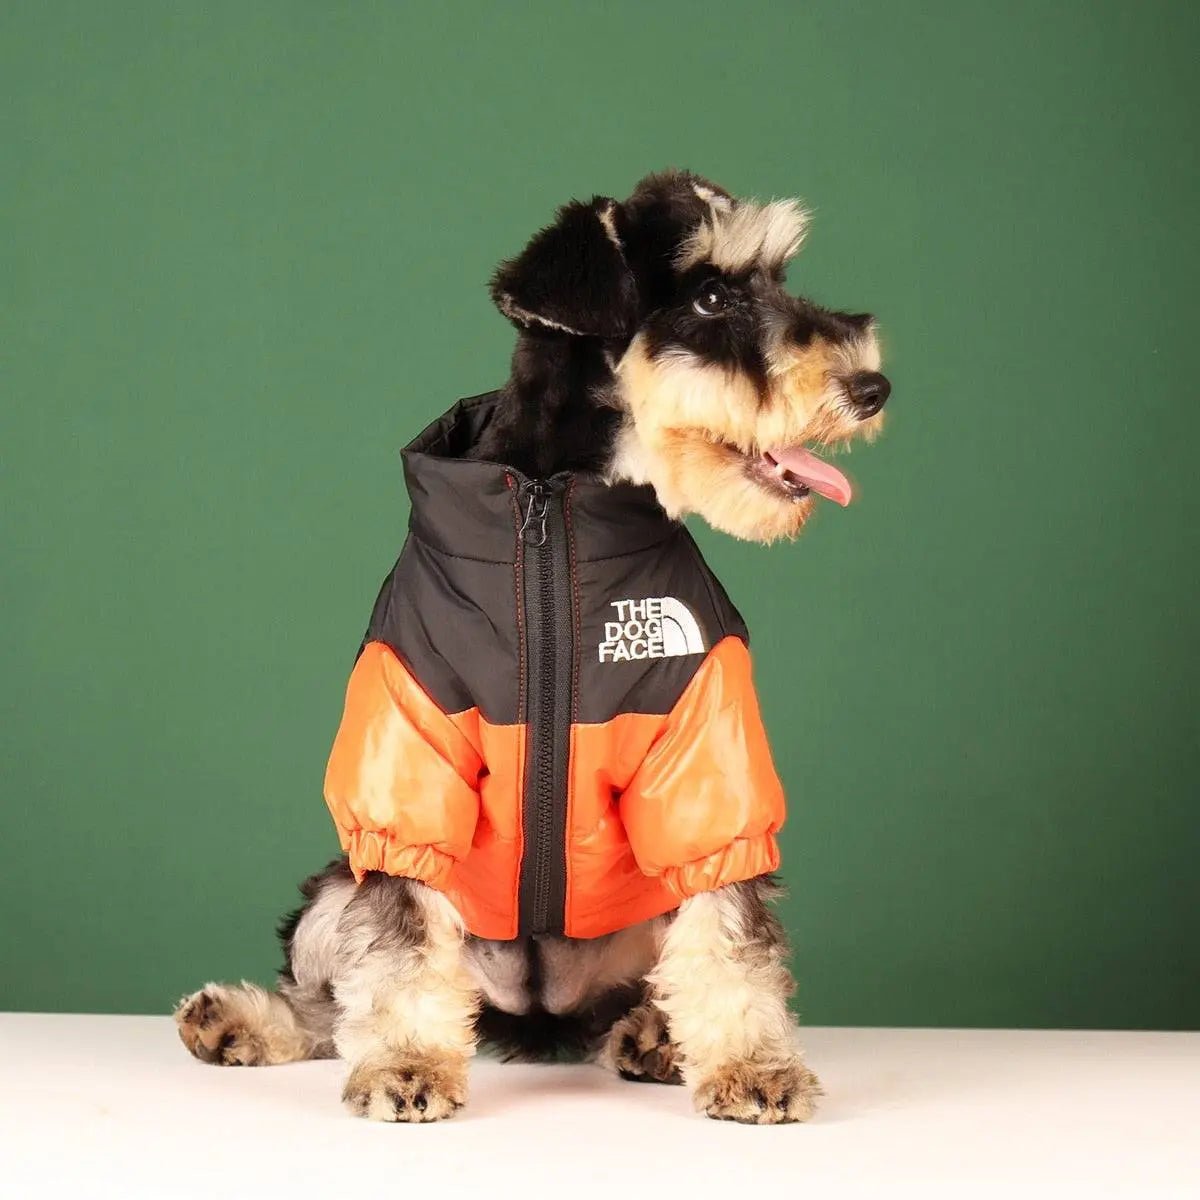 Warm Dog Jackets - WoofMeowProps.com